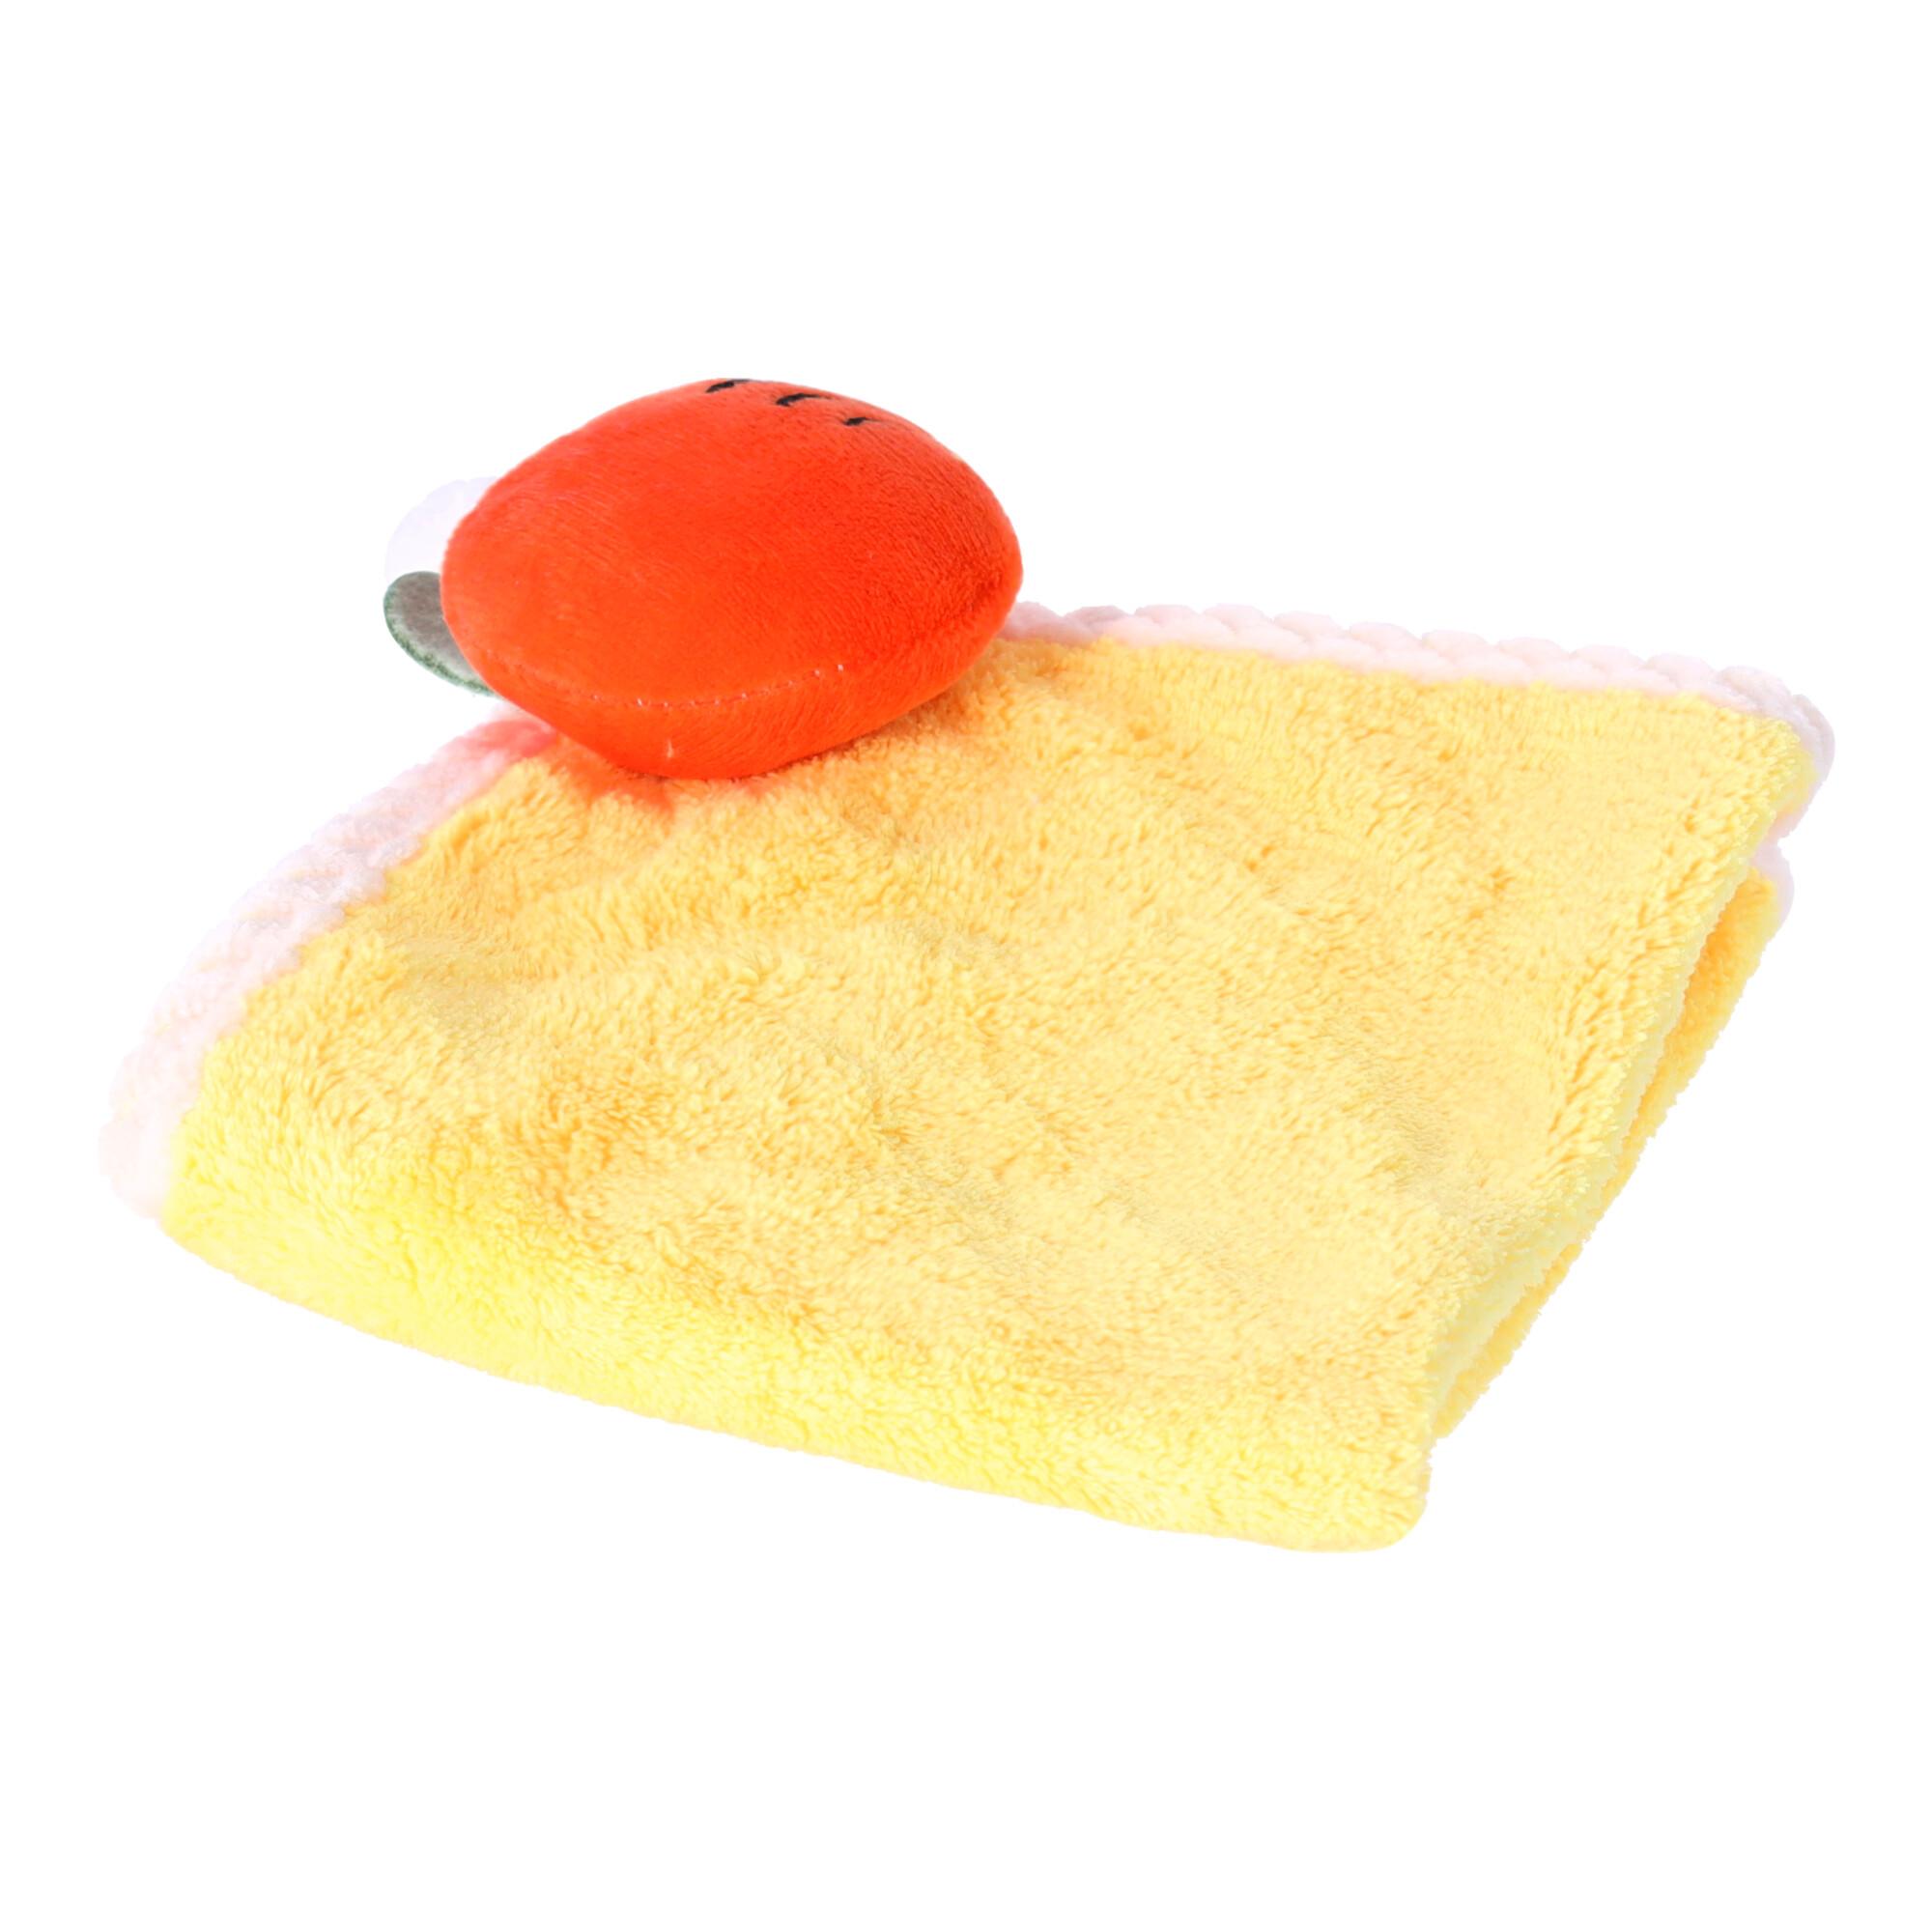 Cute kitchen towel - yellow